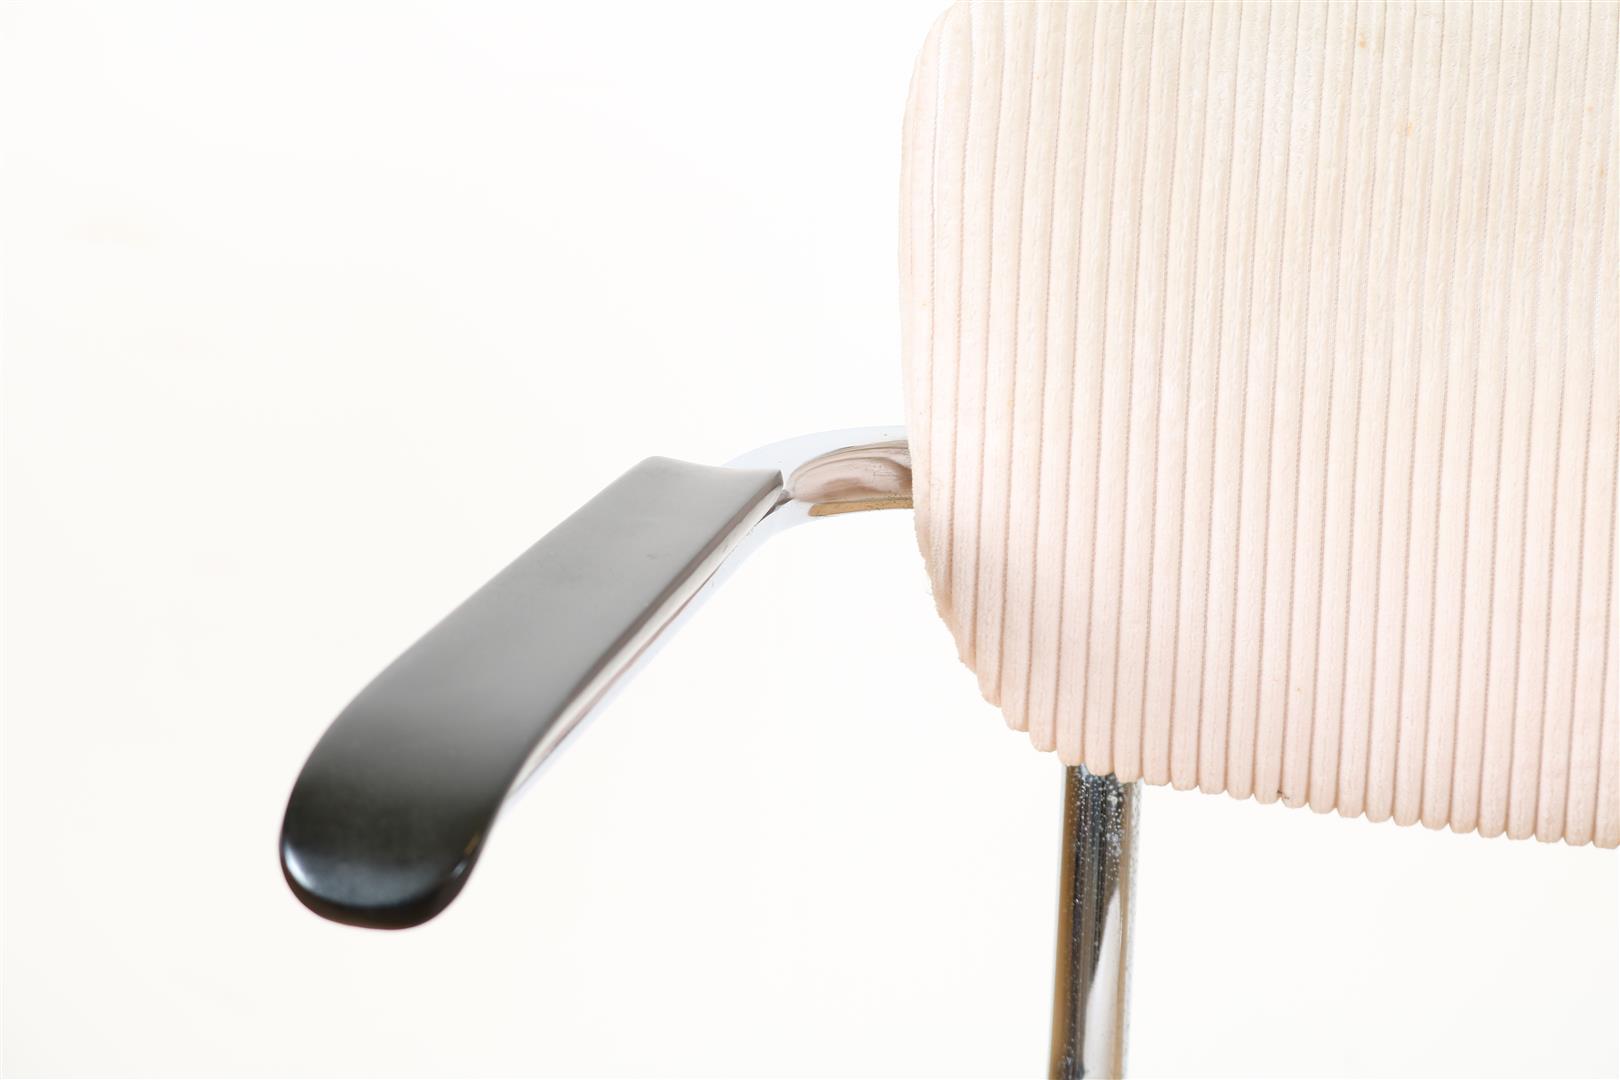 Chrome-plated design armchair with welded back support and bakelite armrests, design Gispen model - Image 5 of 5